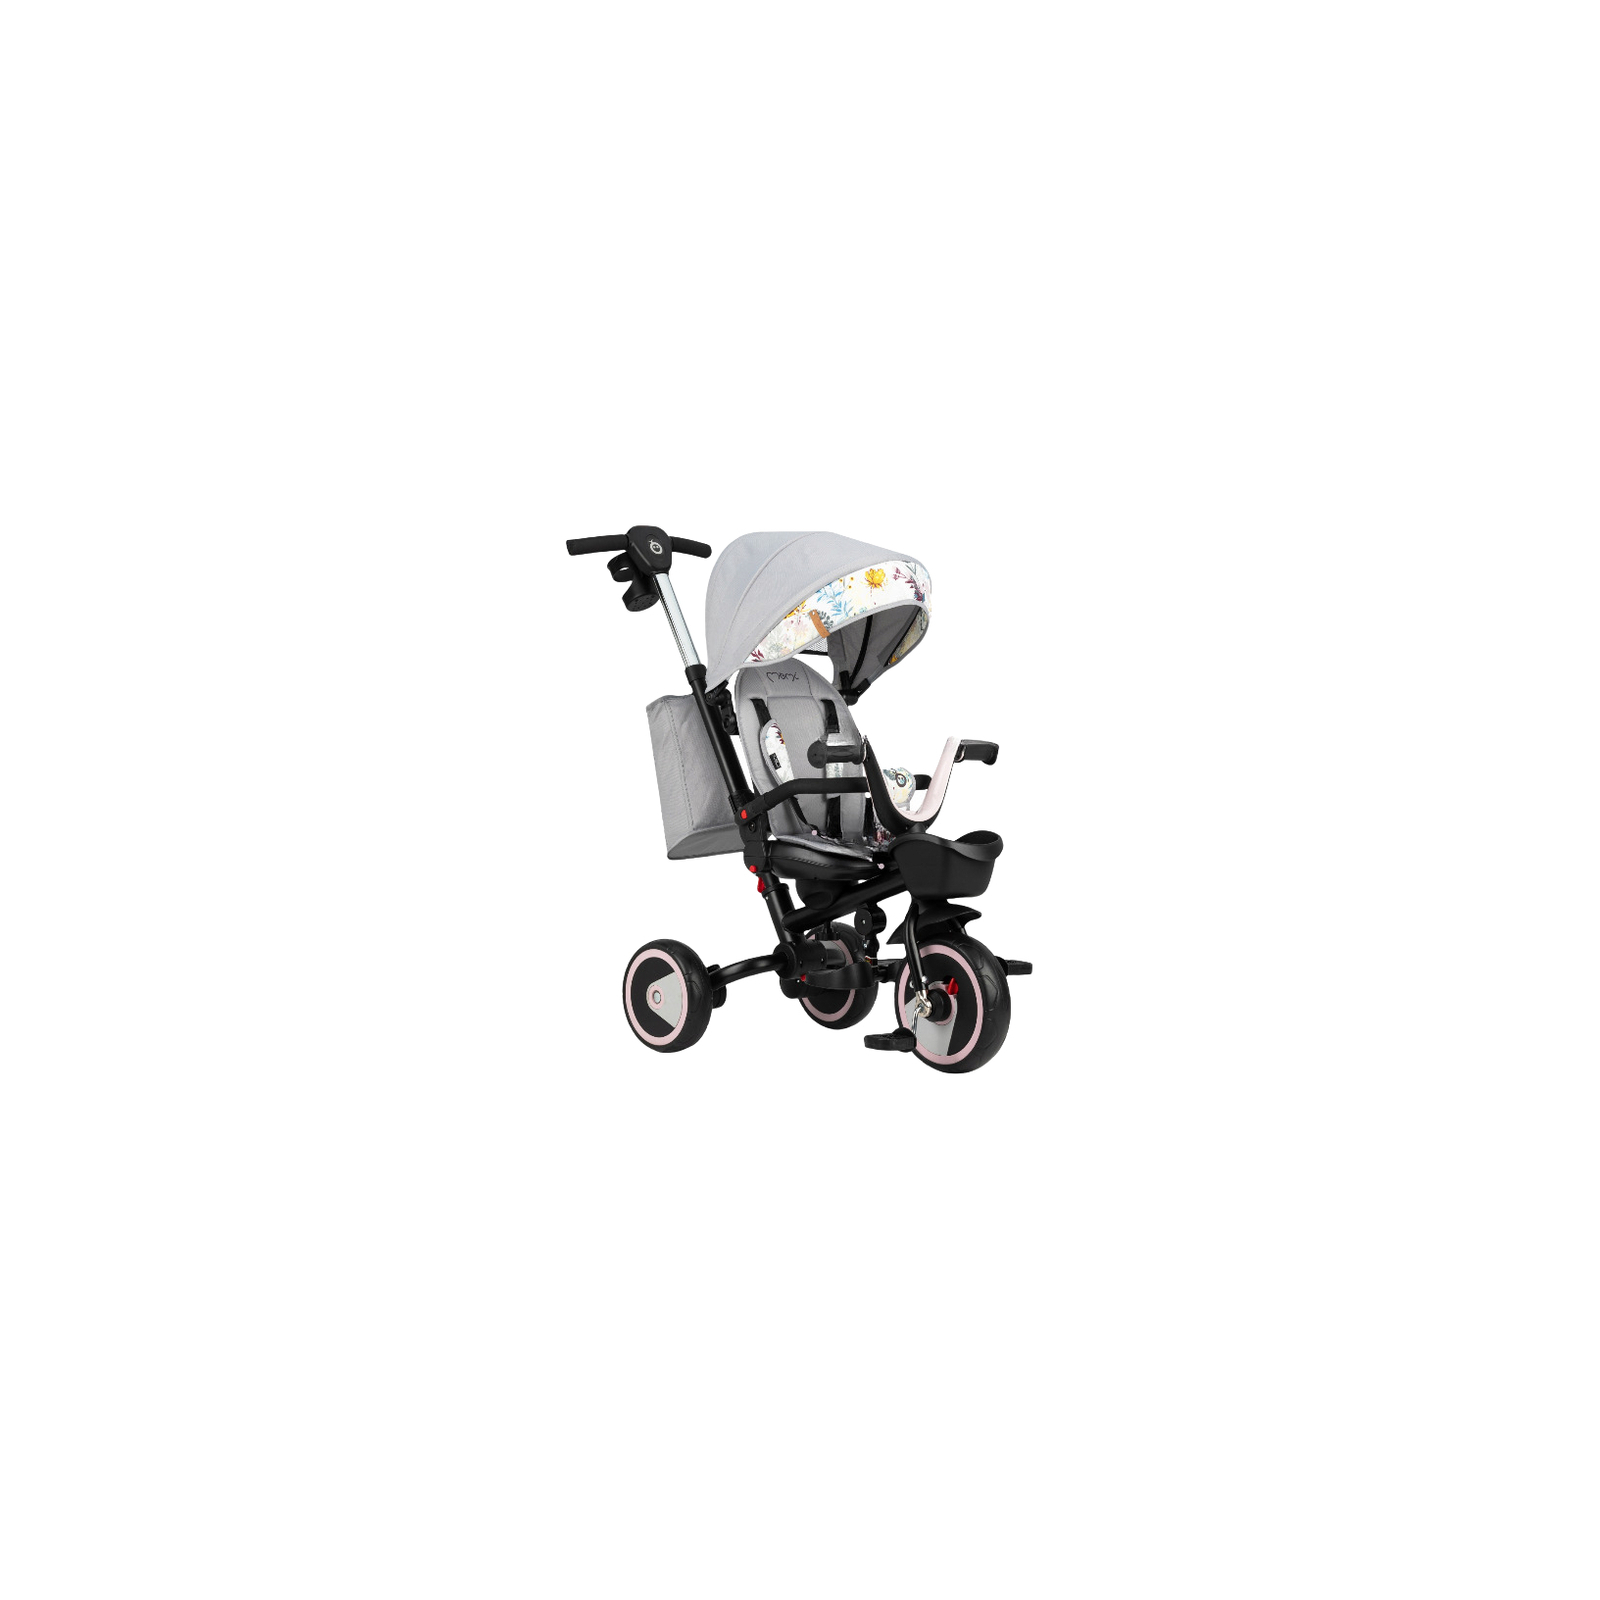 Детский велосипед MoMi Invidia 5 в 1 Темно-синий (ROTR00002)